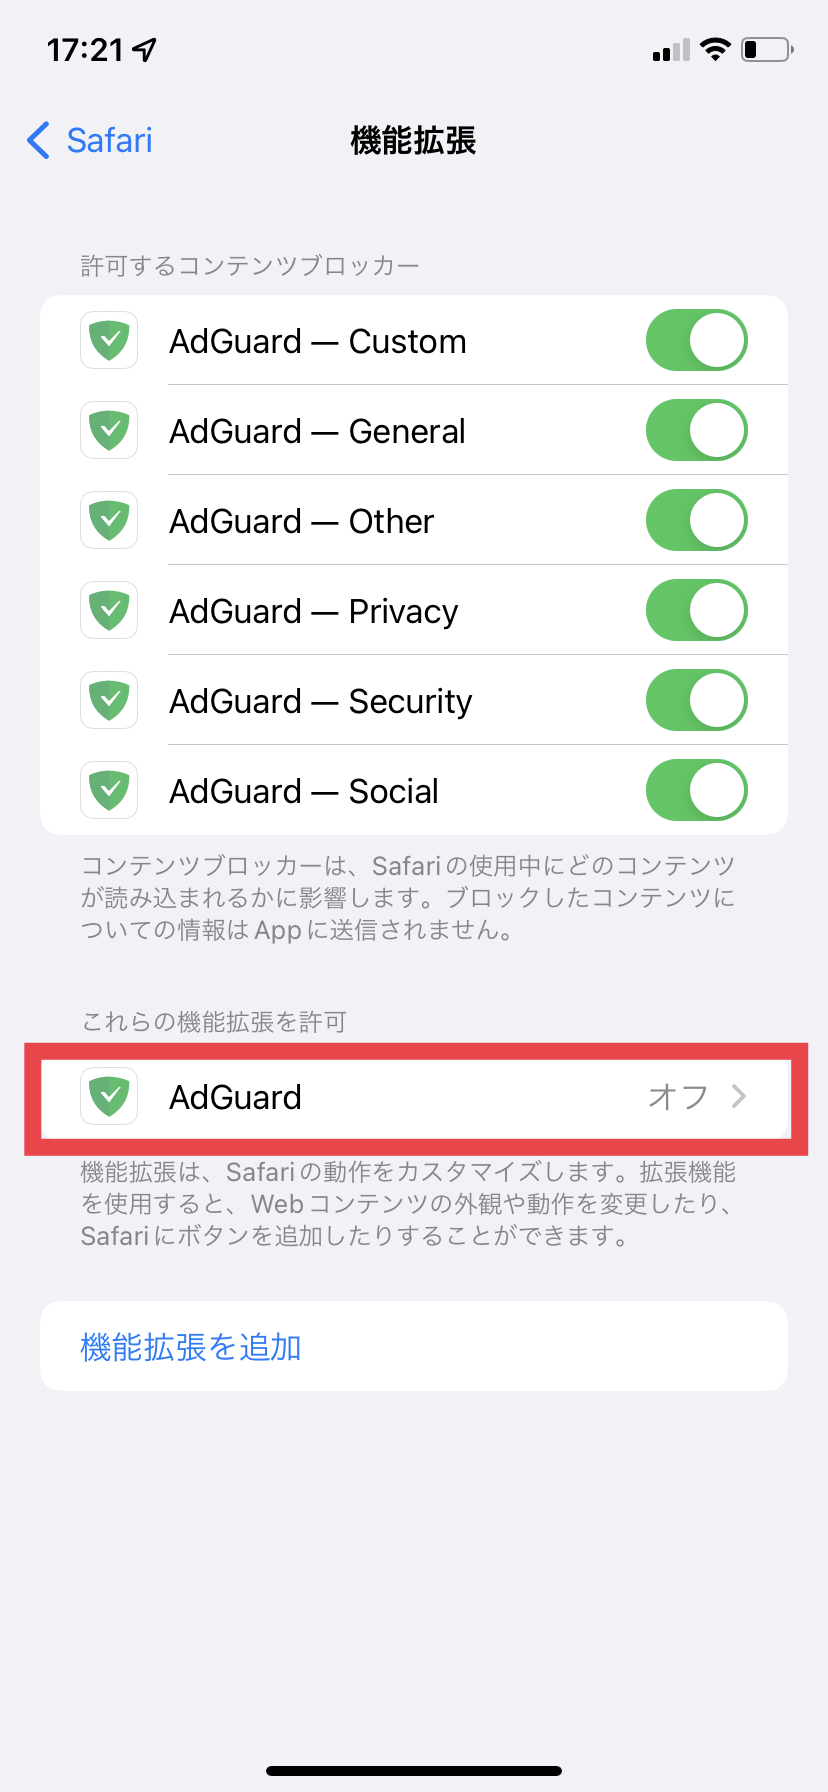 AdGuard *mobile